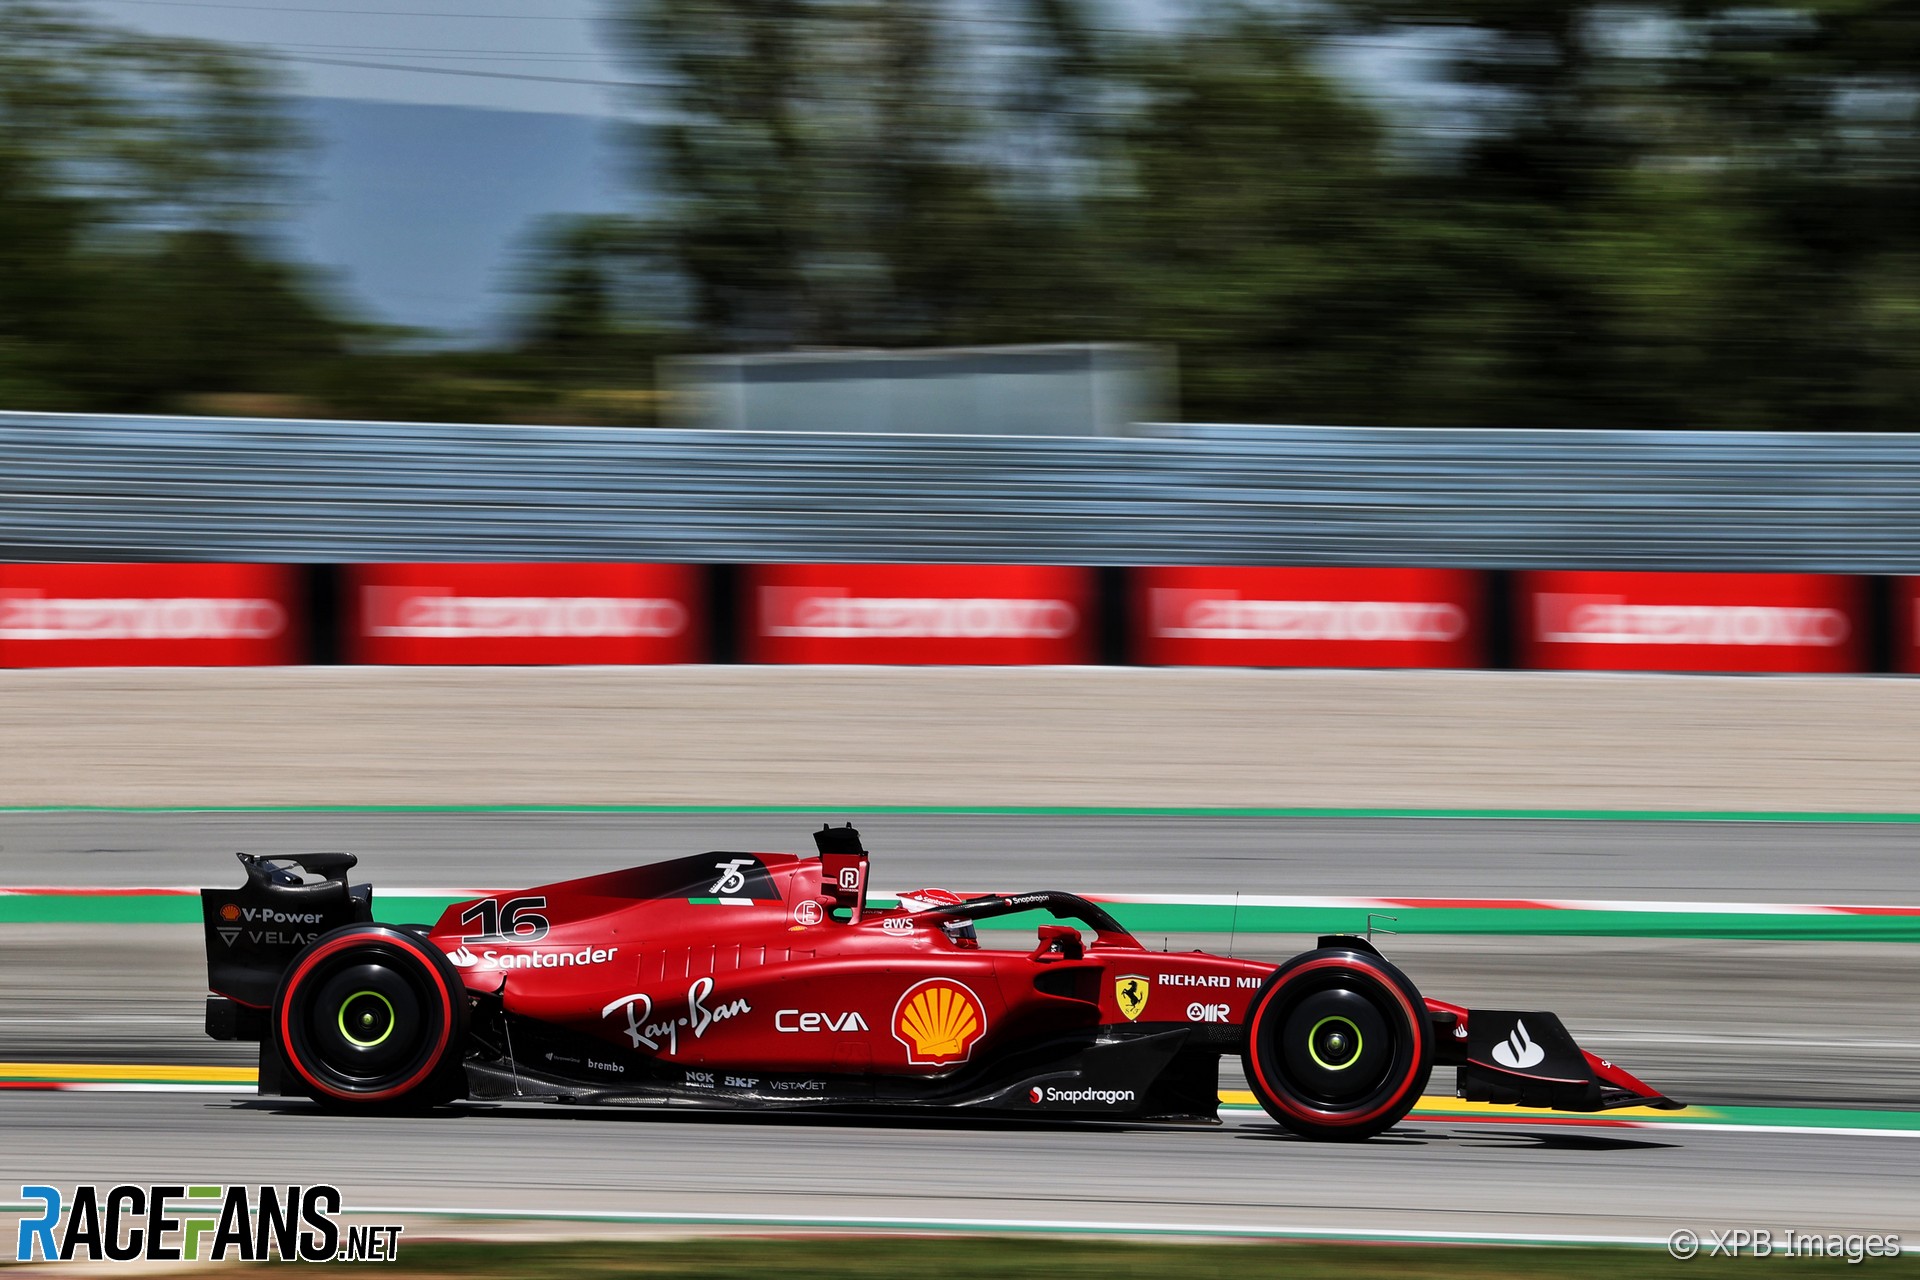 Charles Leclerc, Ferrari, Circuit de Catalunya, 2022